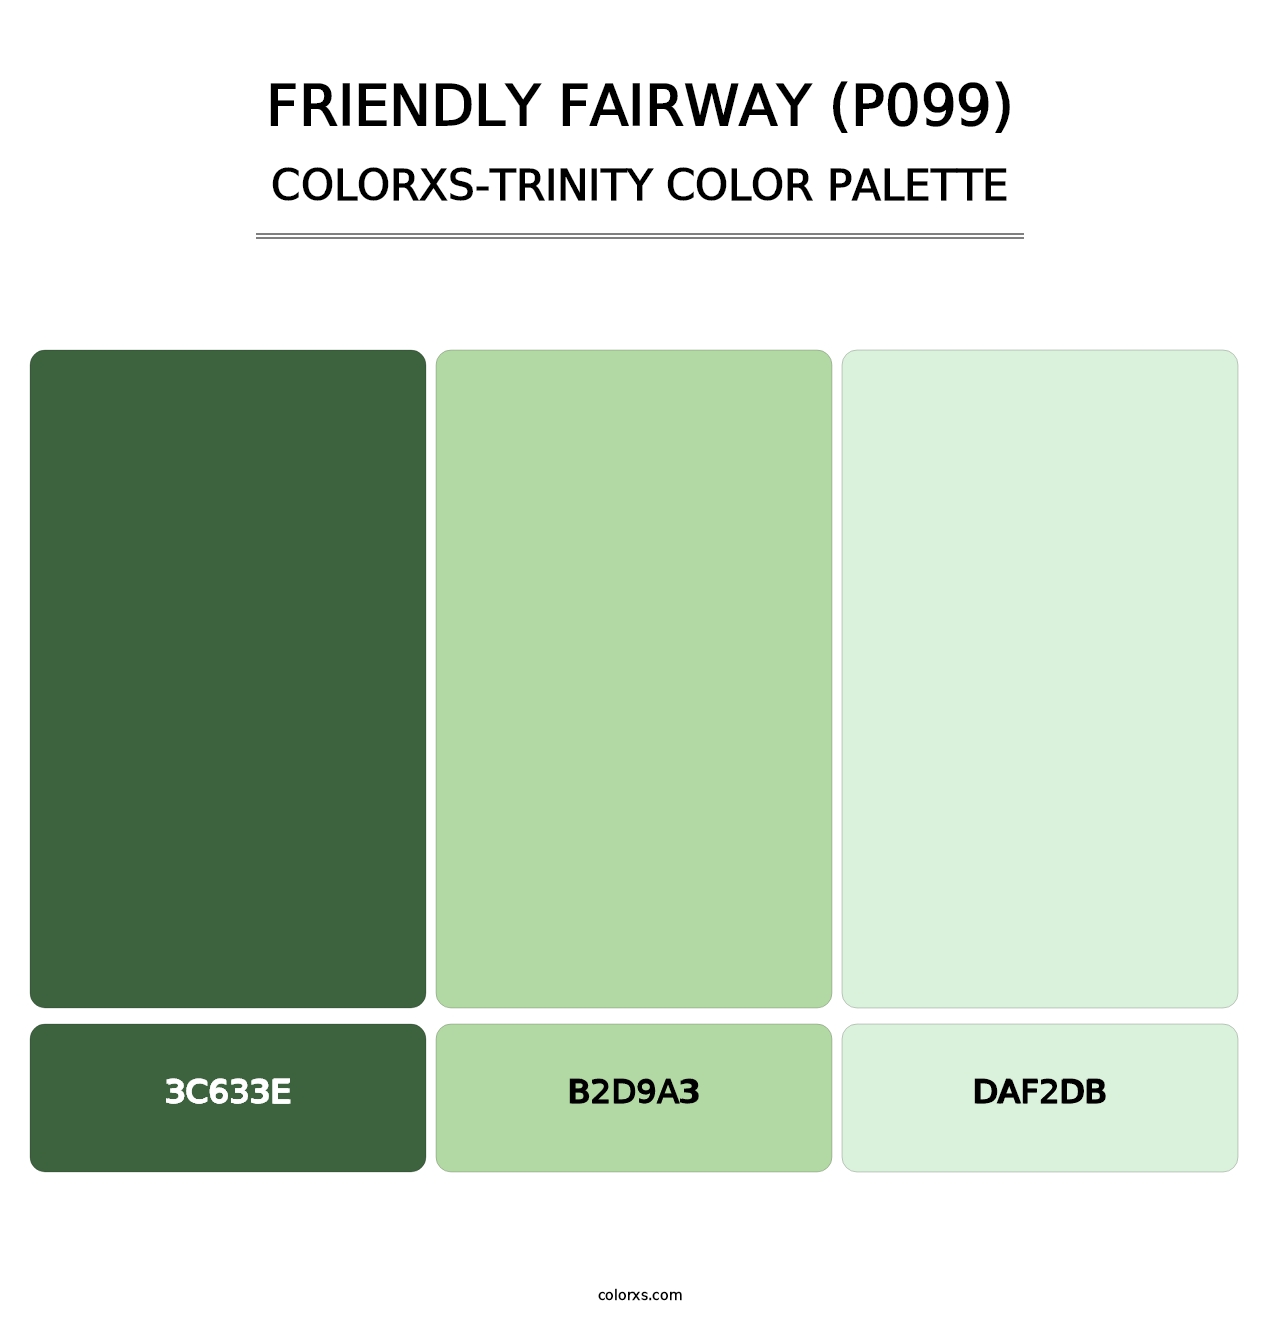 Friendly Fairway (P099) - Colorxs Trinity Palette